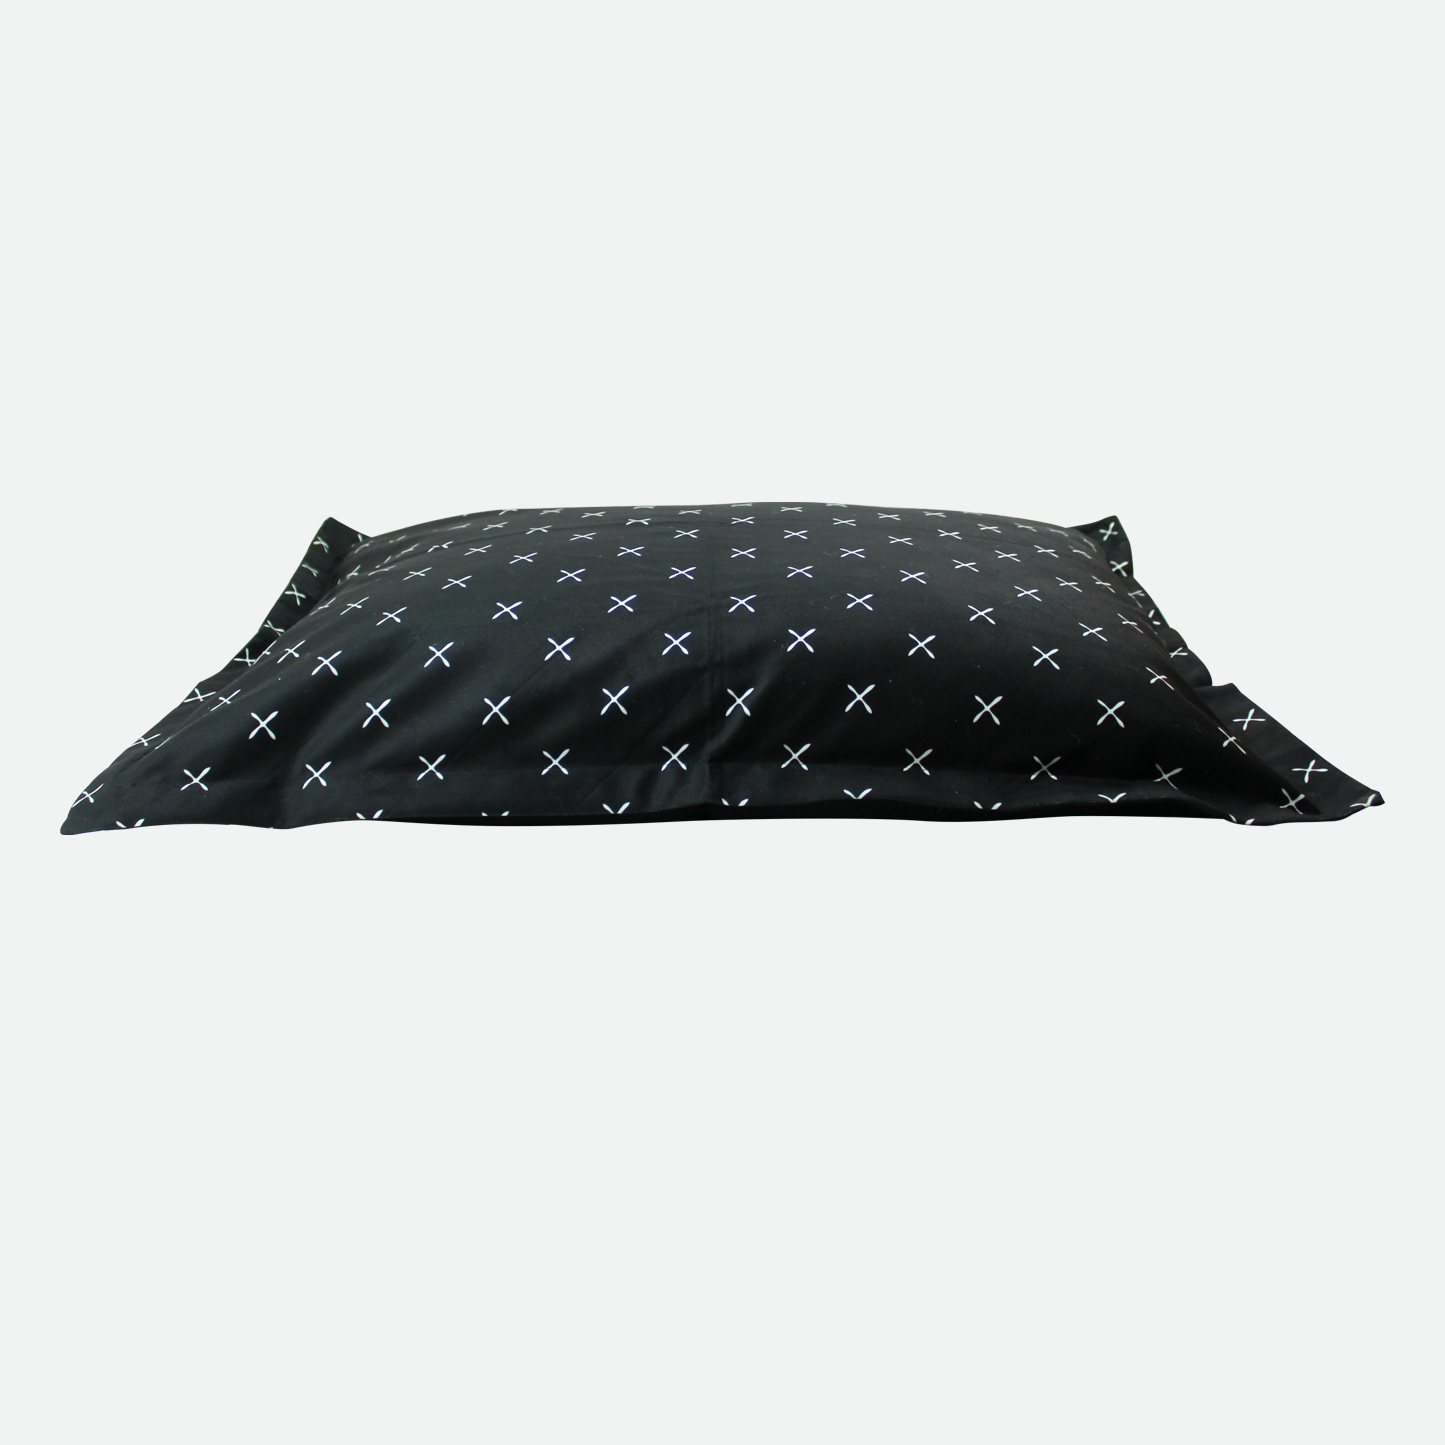 Memory foam dog bed, black X style